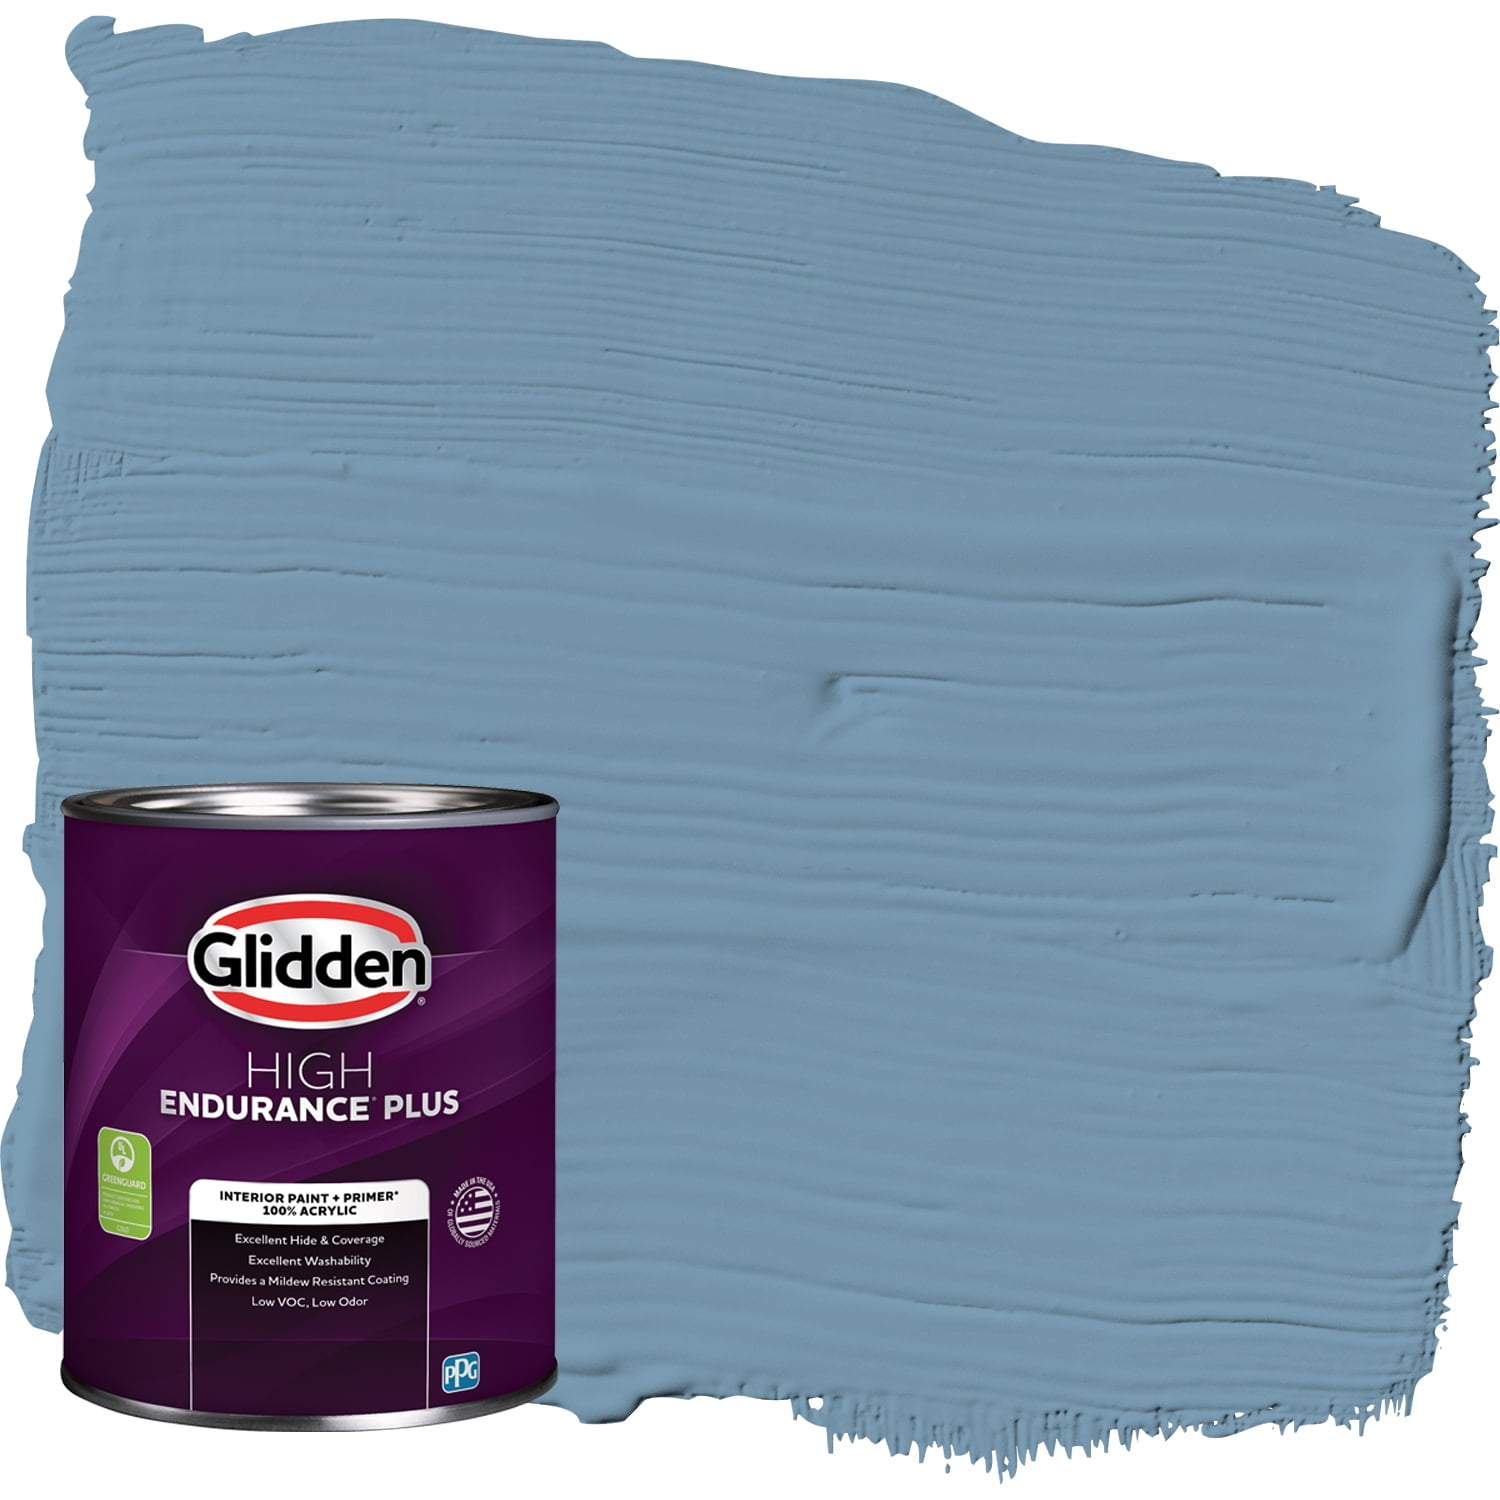 Rust-Oleum 329207-2pk Ultra Matte Interior Chalked Paint, 30 oz, Coastal Blue, 2 Pack